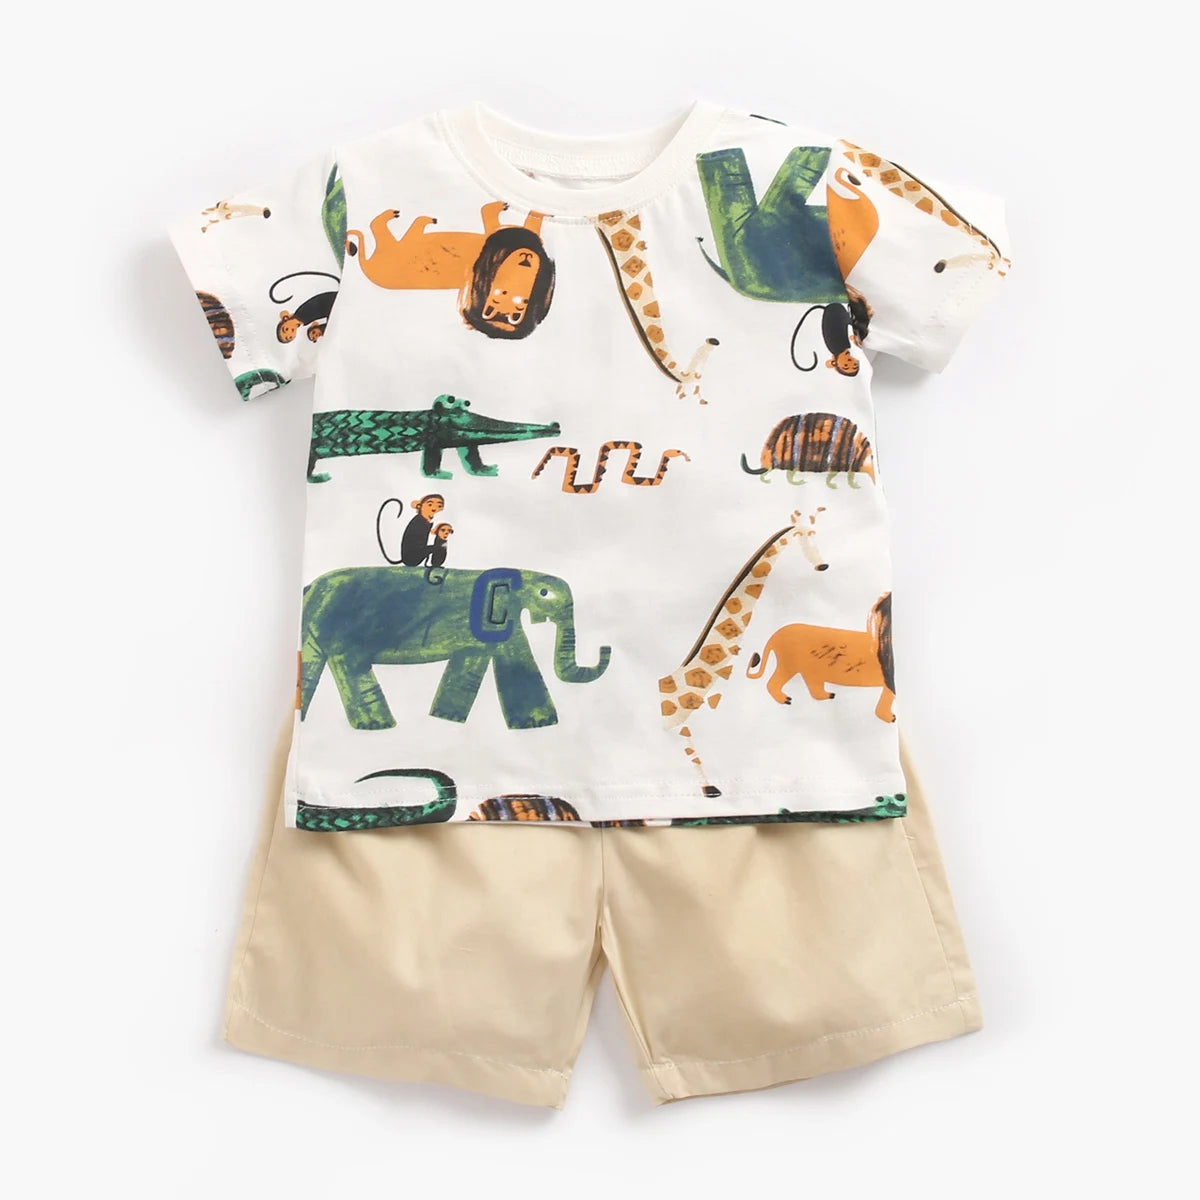 Cartoon-themed Kids Summer Outfit - Baby Boy Shirt & Shorts